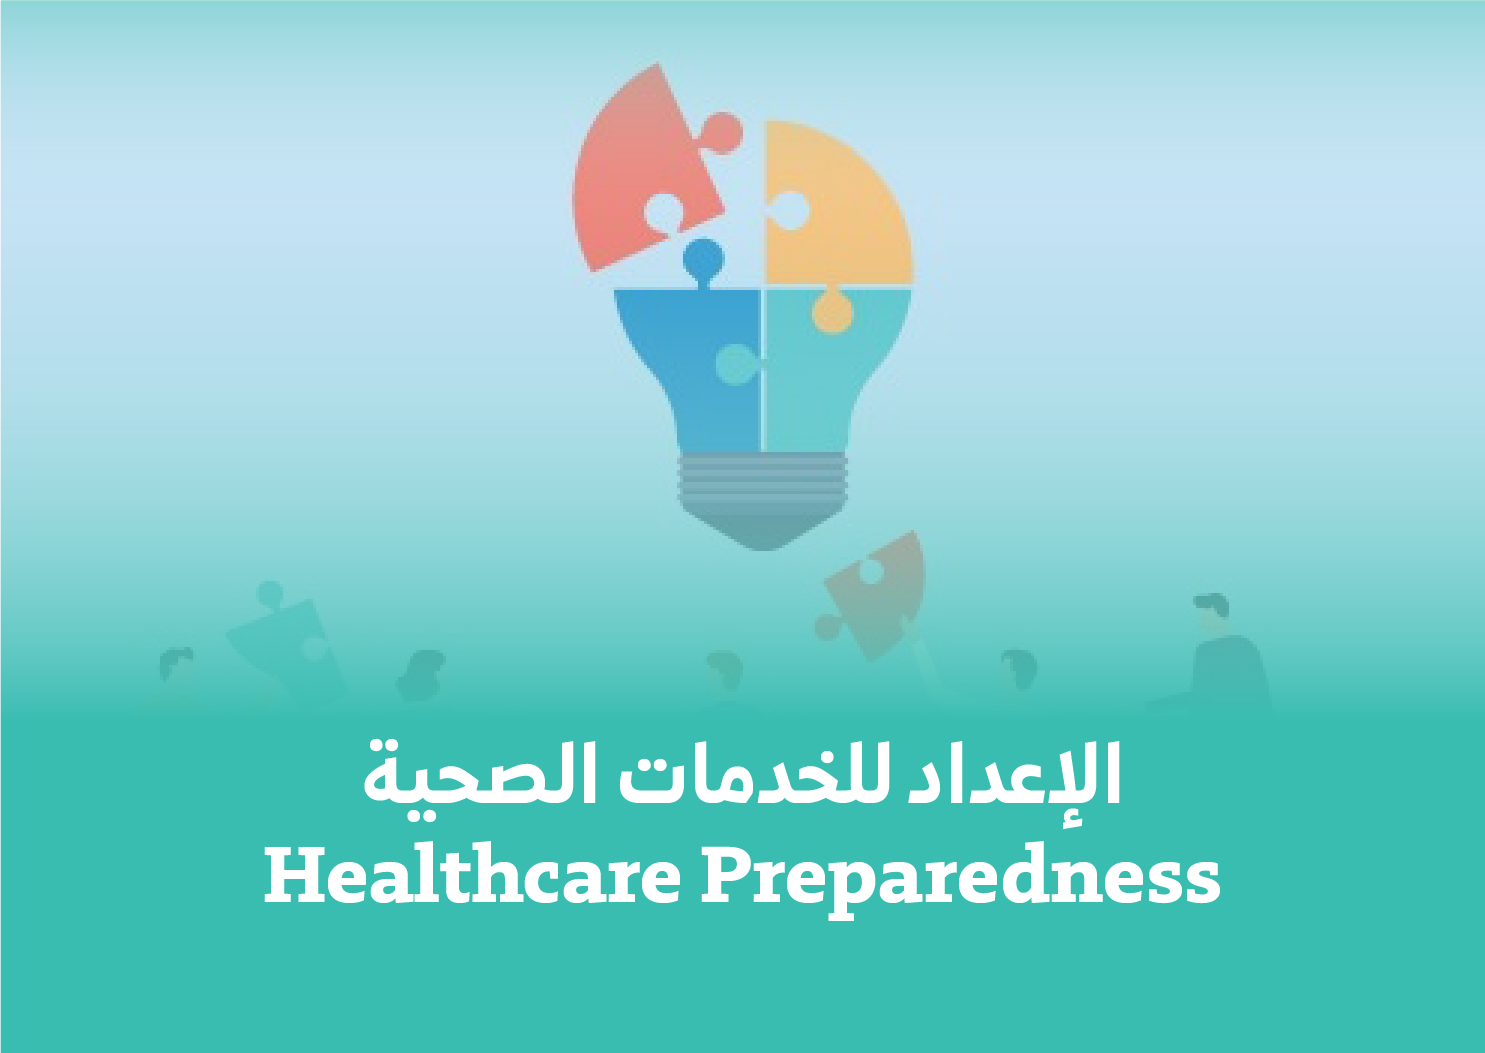 Tabletop - Healthcare Preparedness